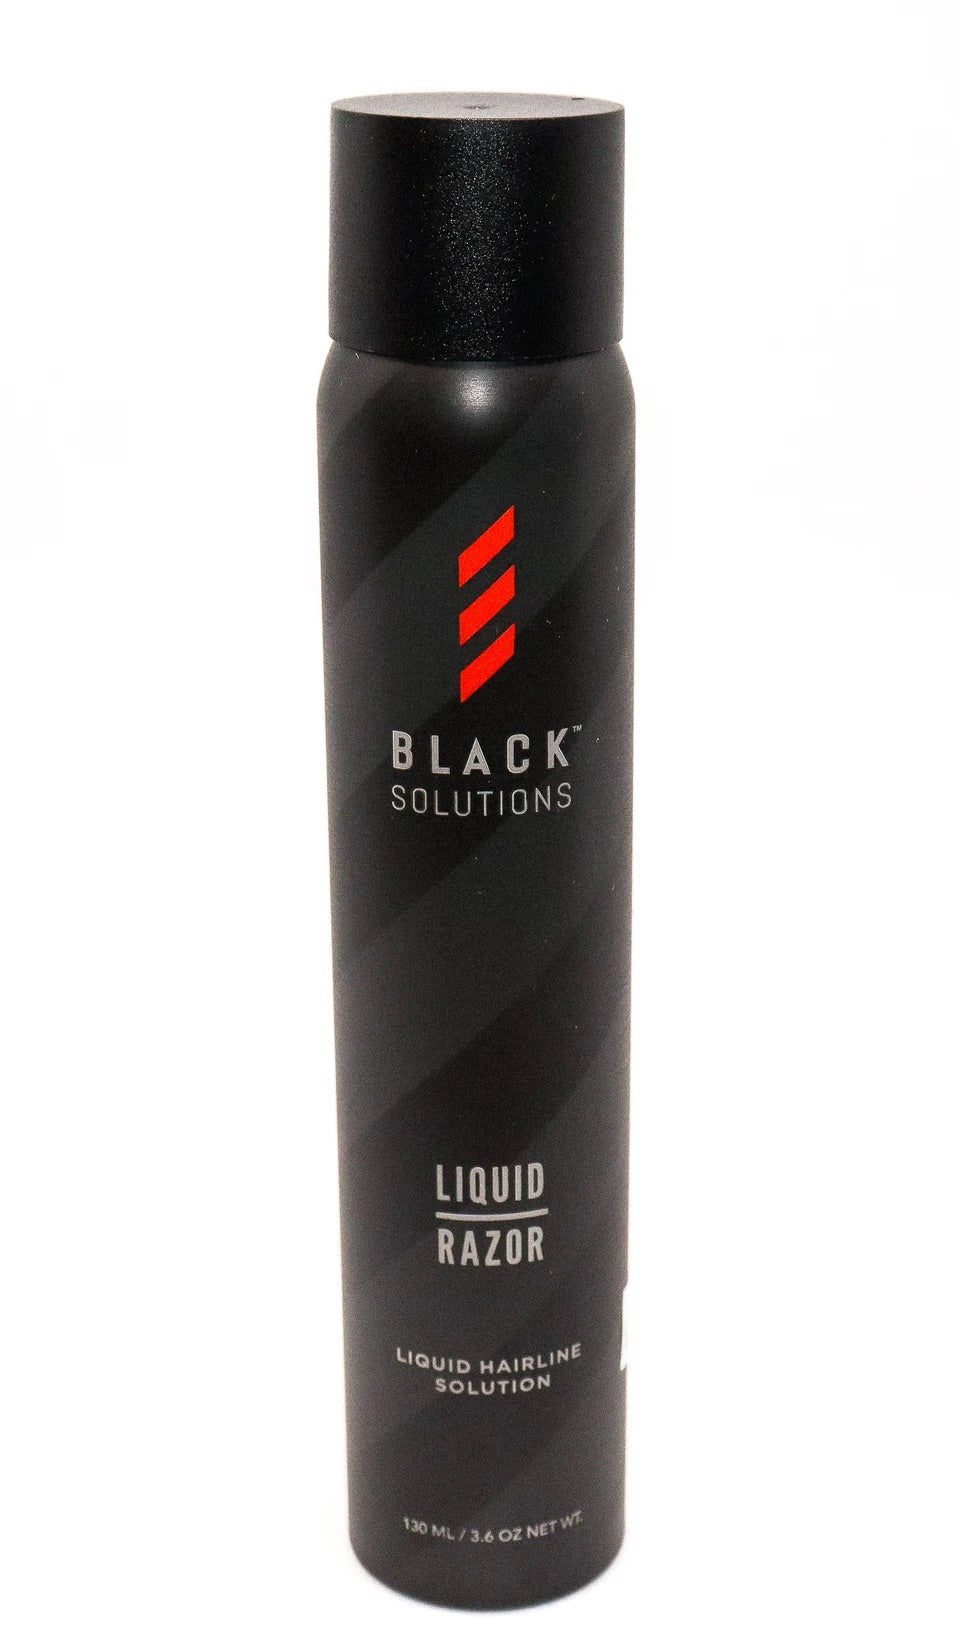 Black Solutions Liquid Razor 130ml/3.6oz